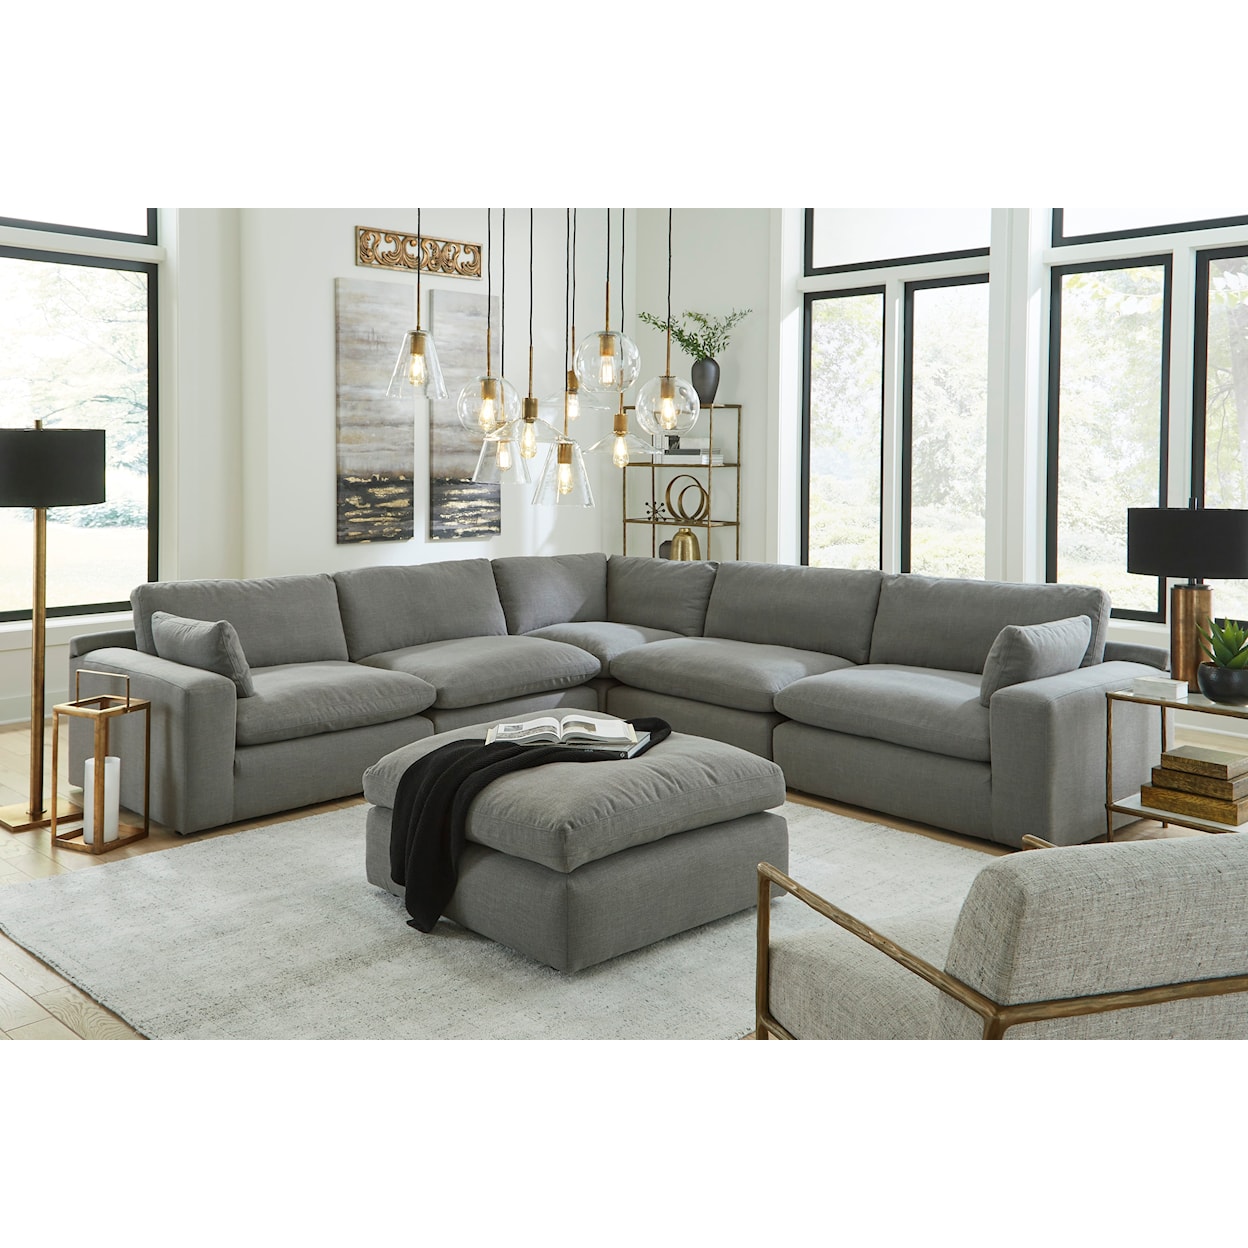 Benchcraft by Ashley Elyza Living Room Set